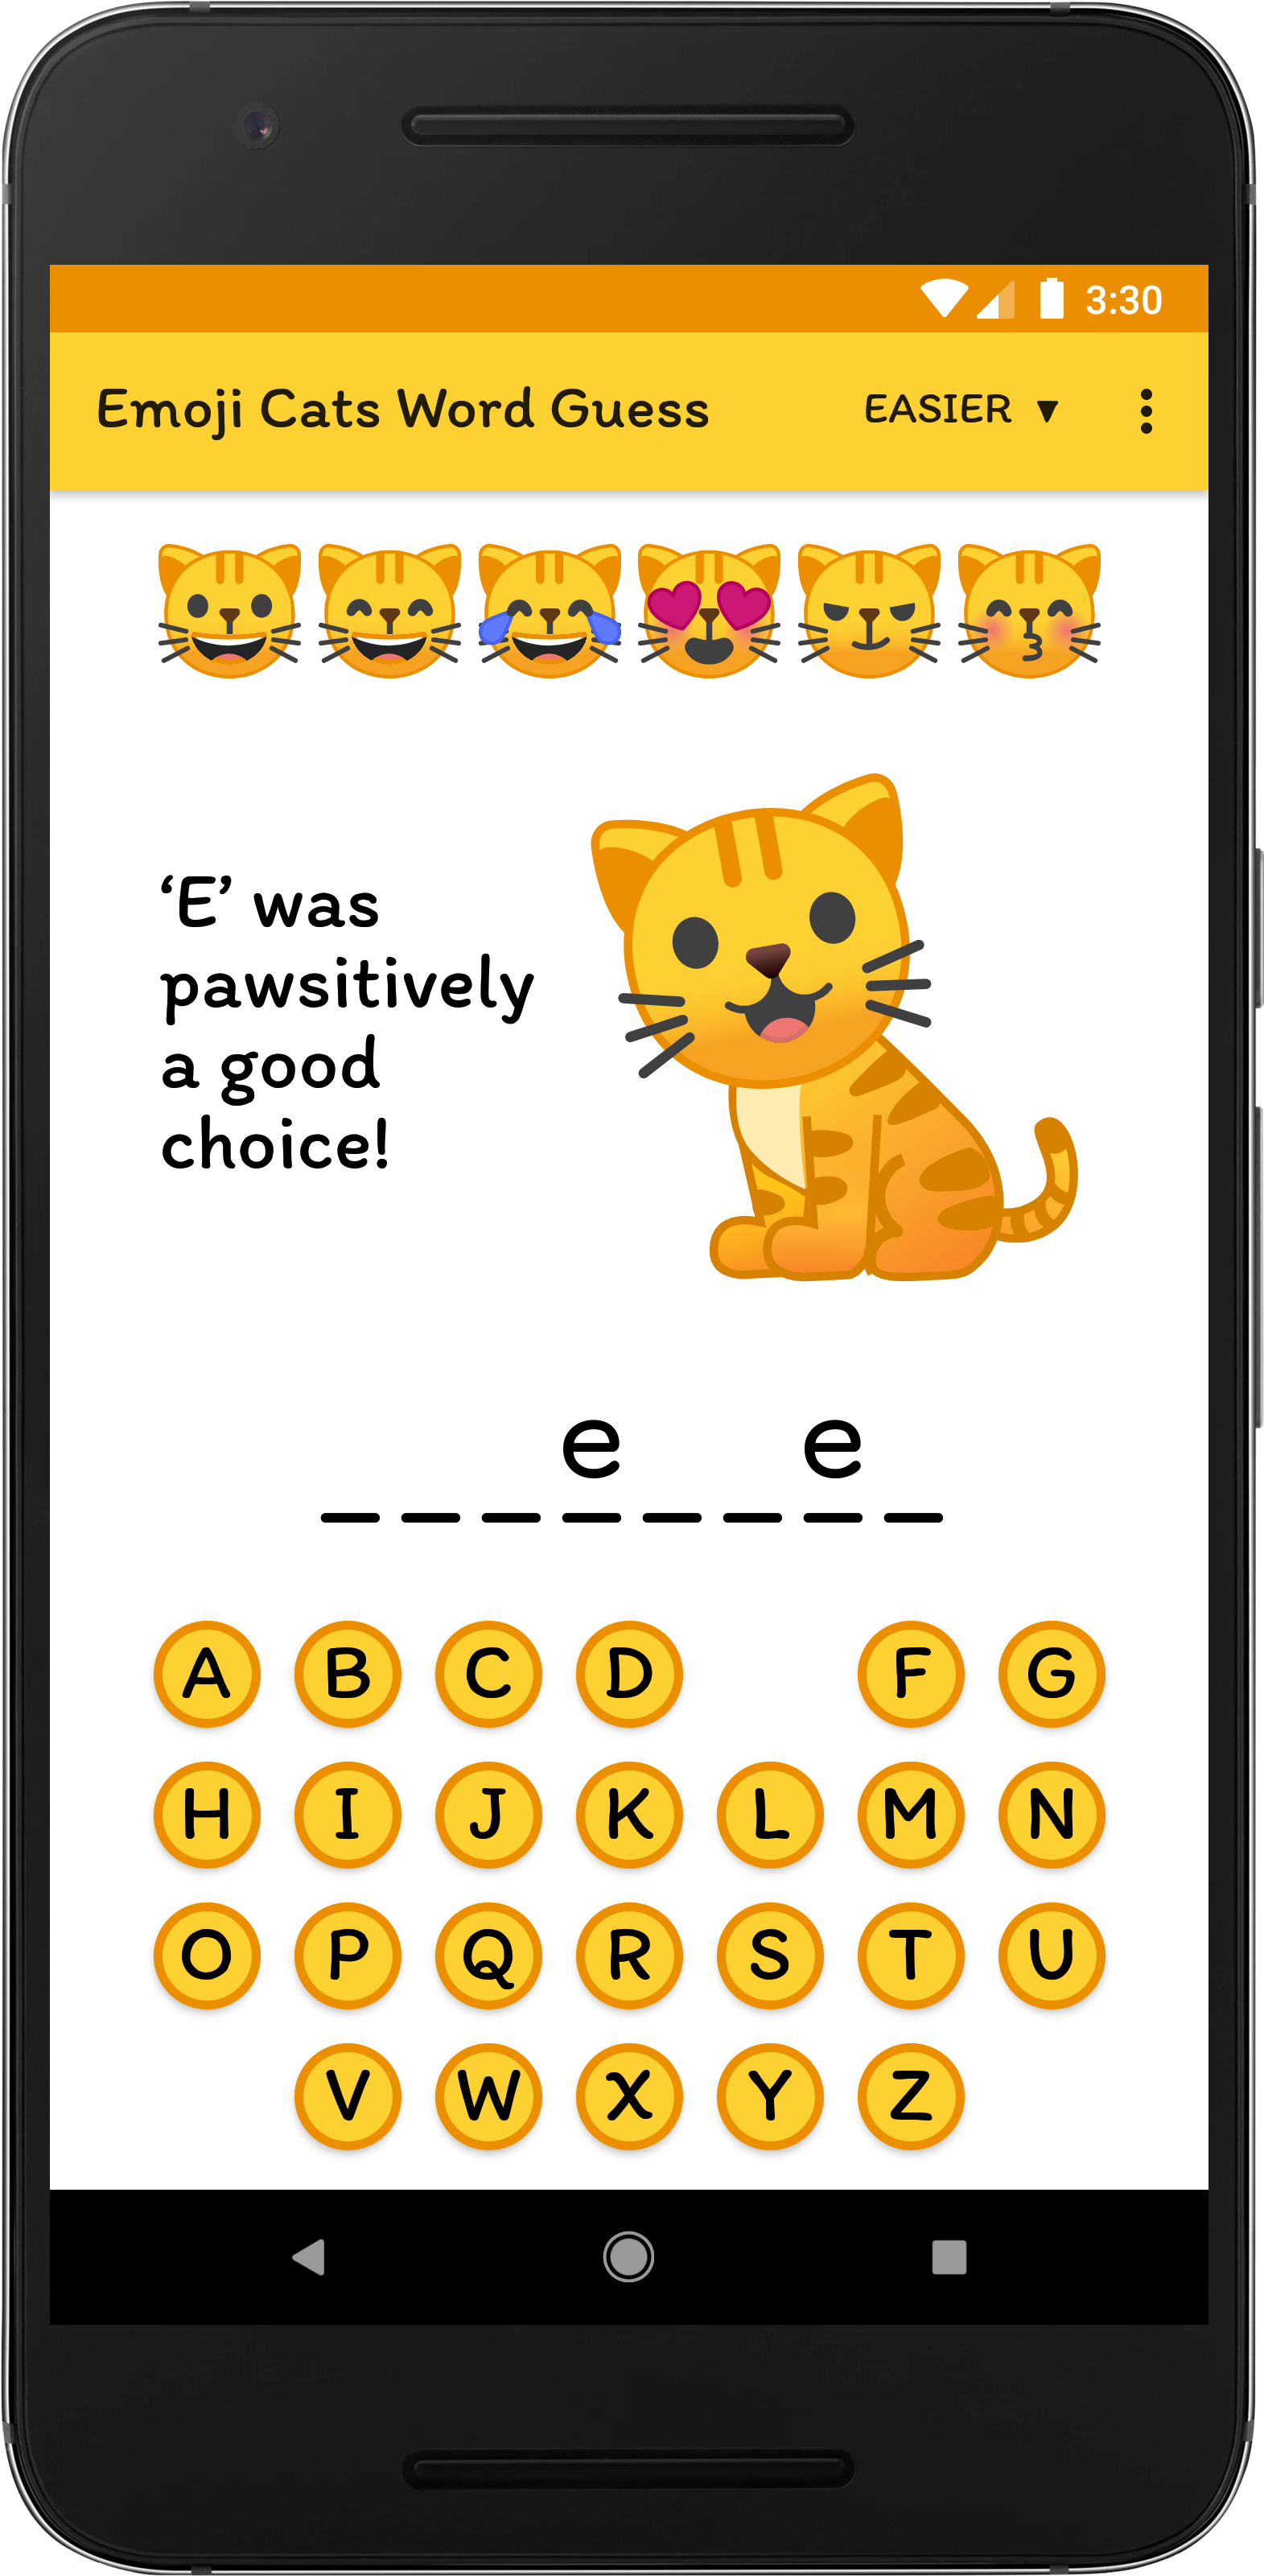 Træts webspindel Tentacle Rosefarve Tips and Tricks for guessing letters – Emoji Cats Word Guess